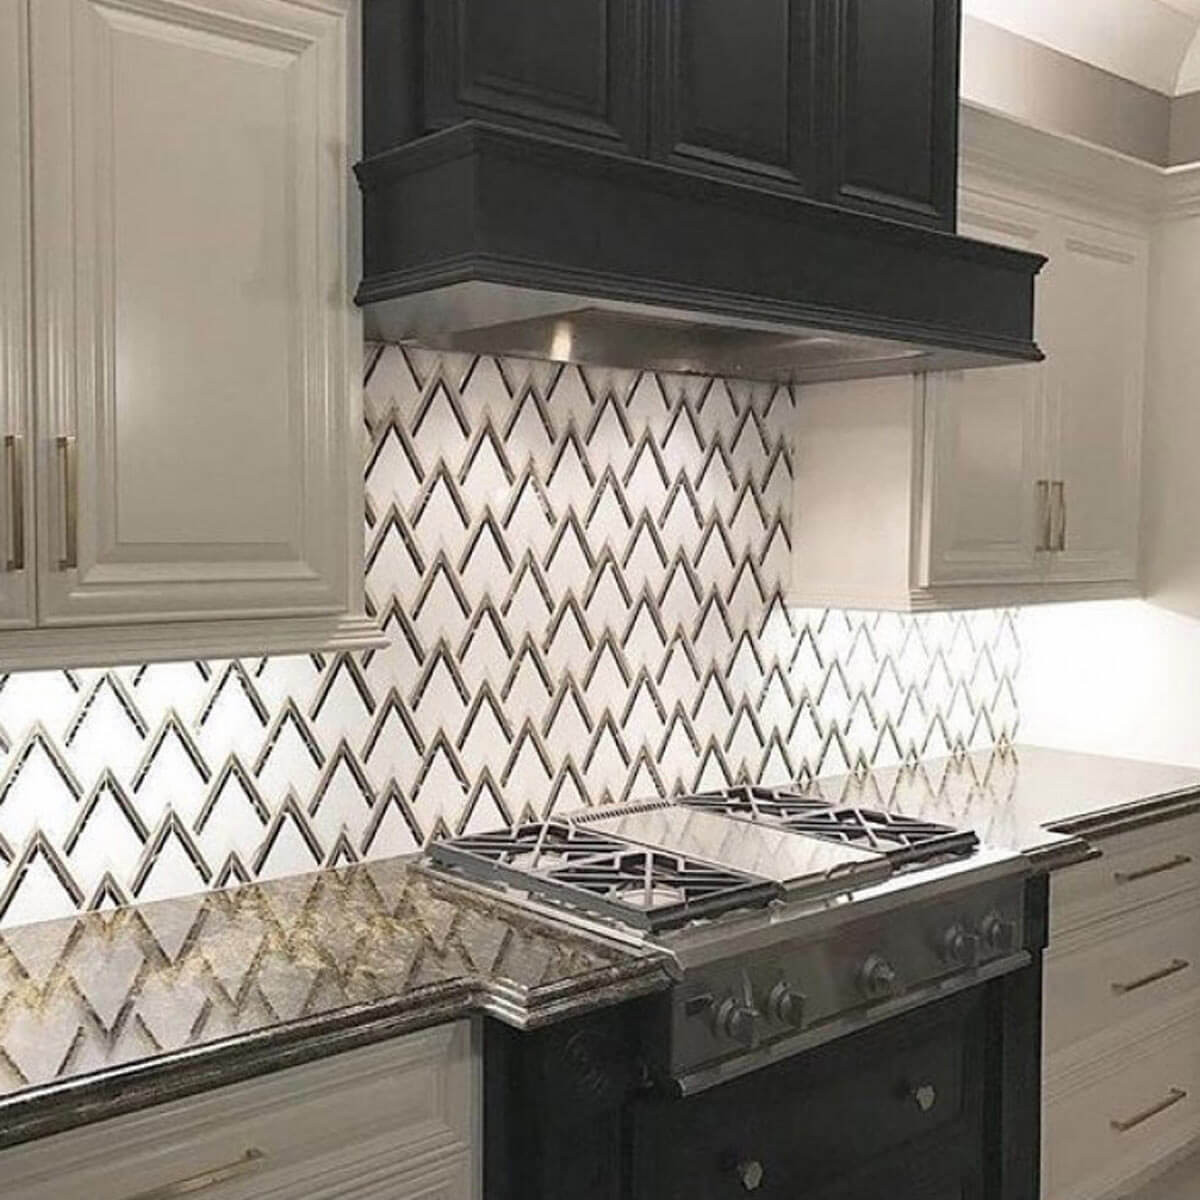 Tile Backsplash Ideas Kitchen
 14 Showstopping Tile Backsplash Ideas To Suit Any Style